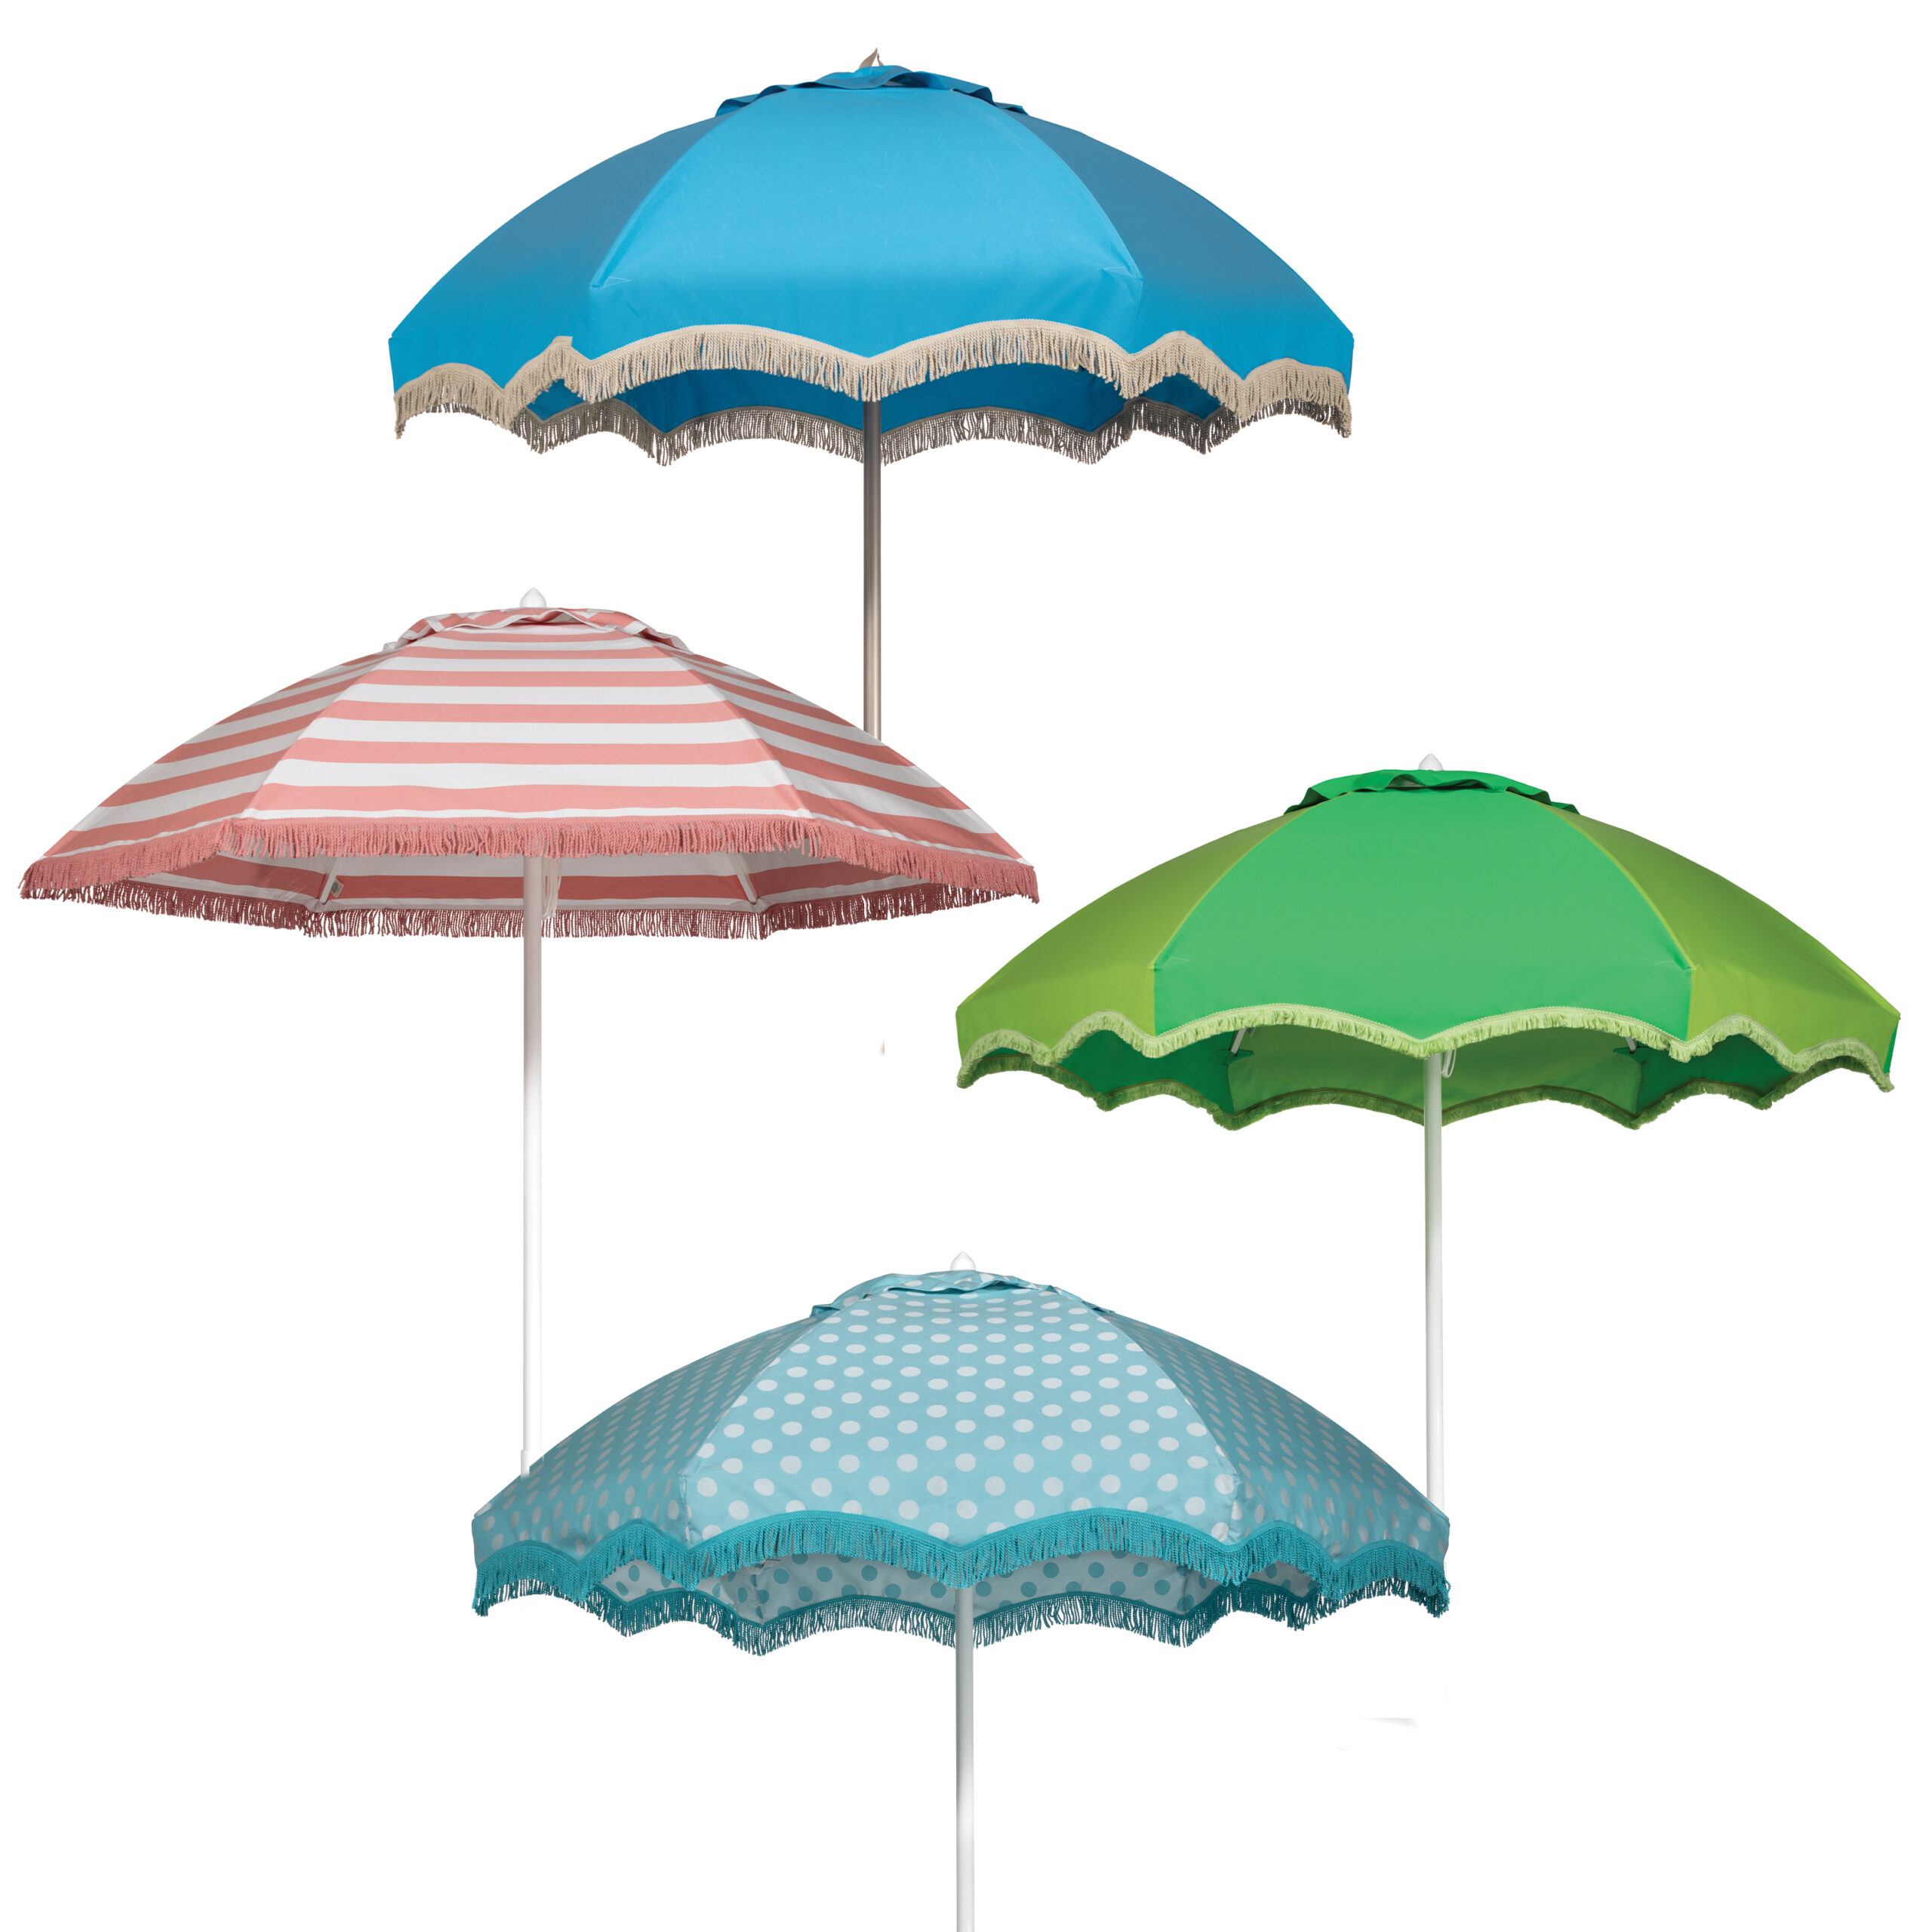 Image of 4 Mirasol umbrellas